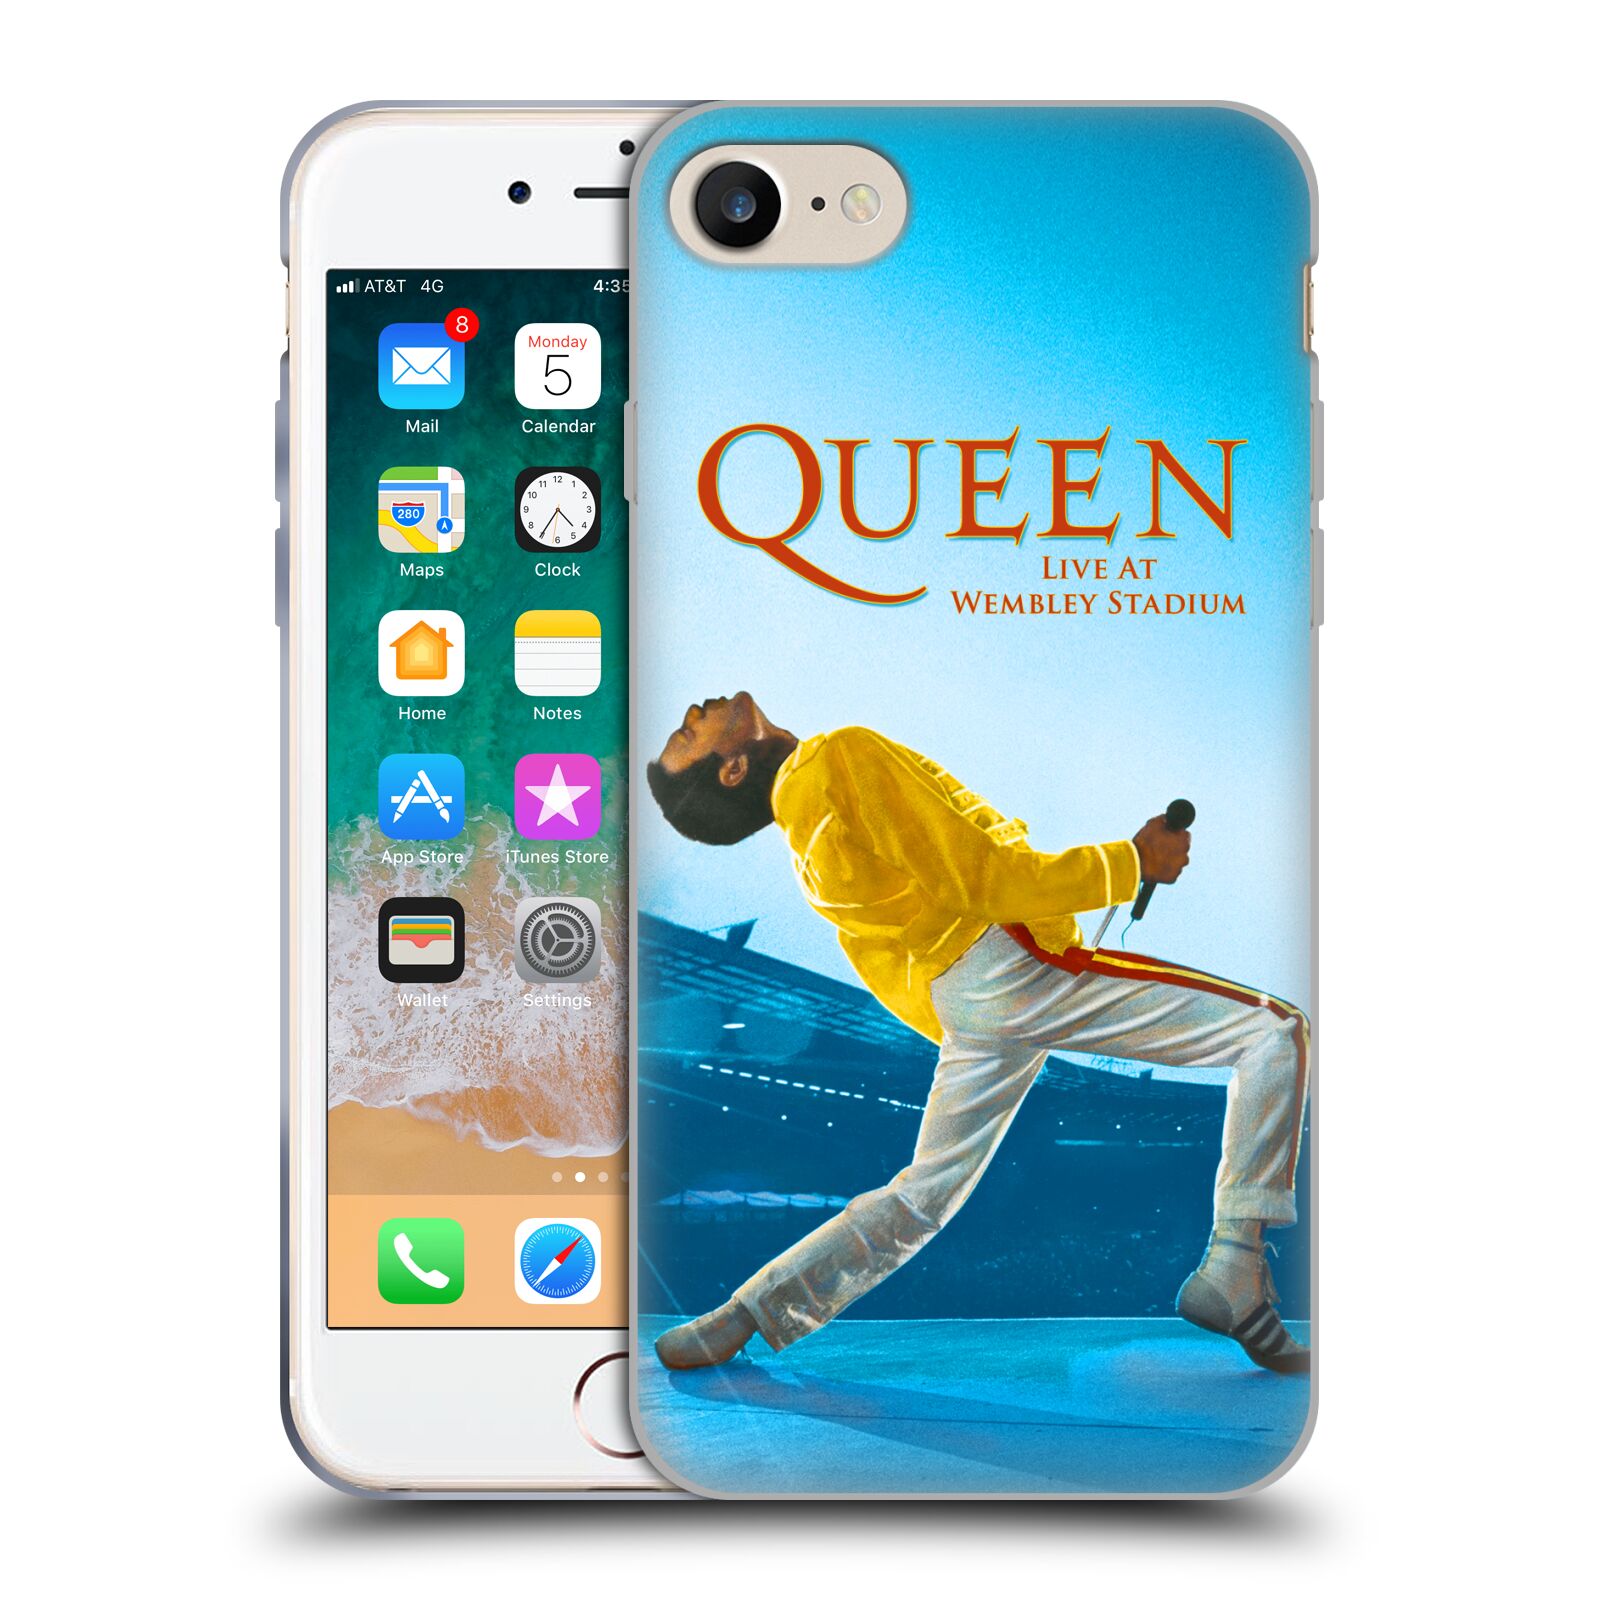 Silikonové pouzdro na mobil Apple iPhone SE 2022 / SE 2020 - Head Case - Queen - Freddie Mercury (Silikonový kryt, obal, pouzdro na mobilní telefon Apple iPhone SE 2020 / Apple iPhone SE 2022 s motivem Queen - Freddie Mercury)